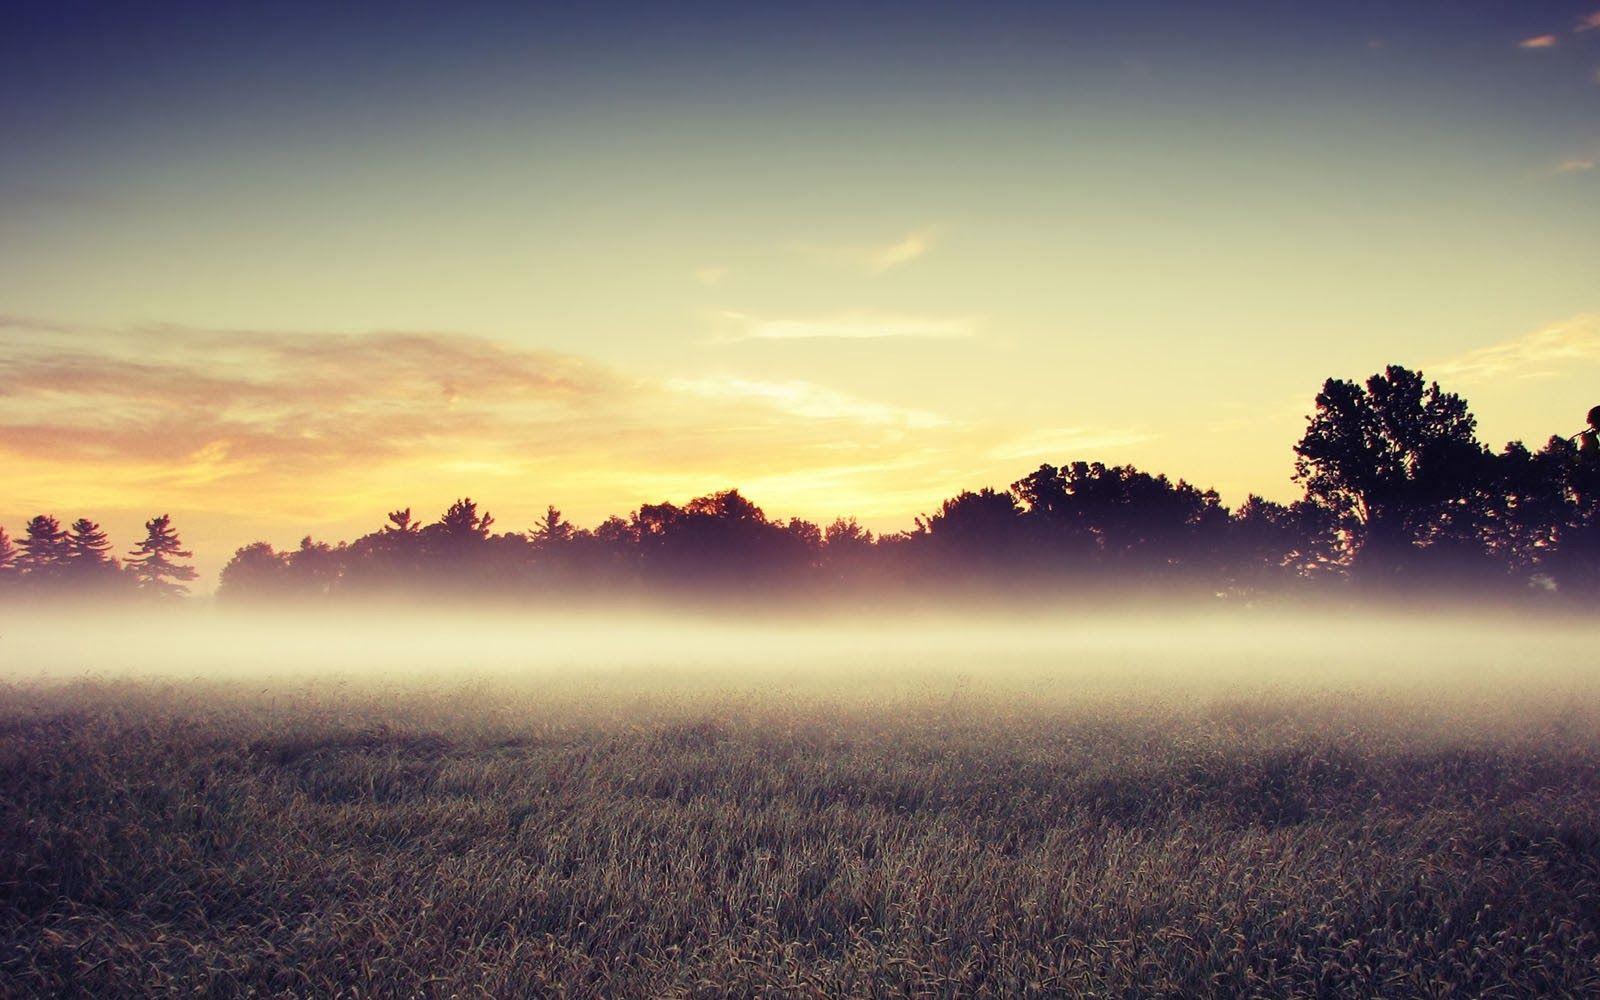 The morning mist